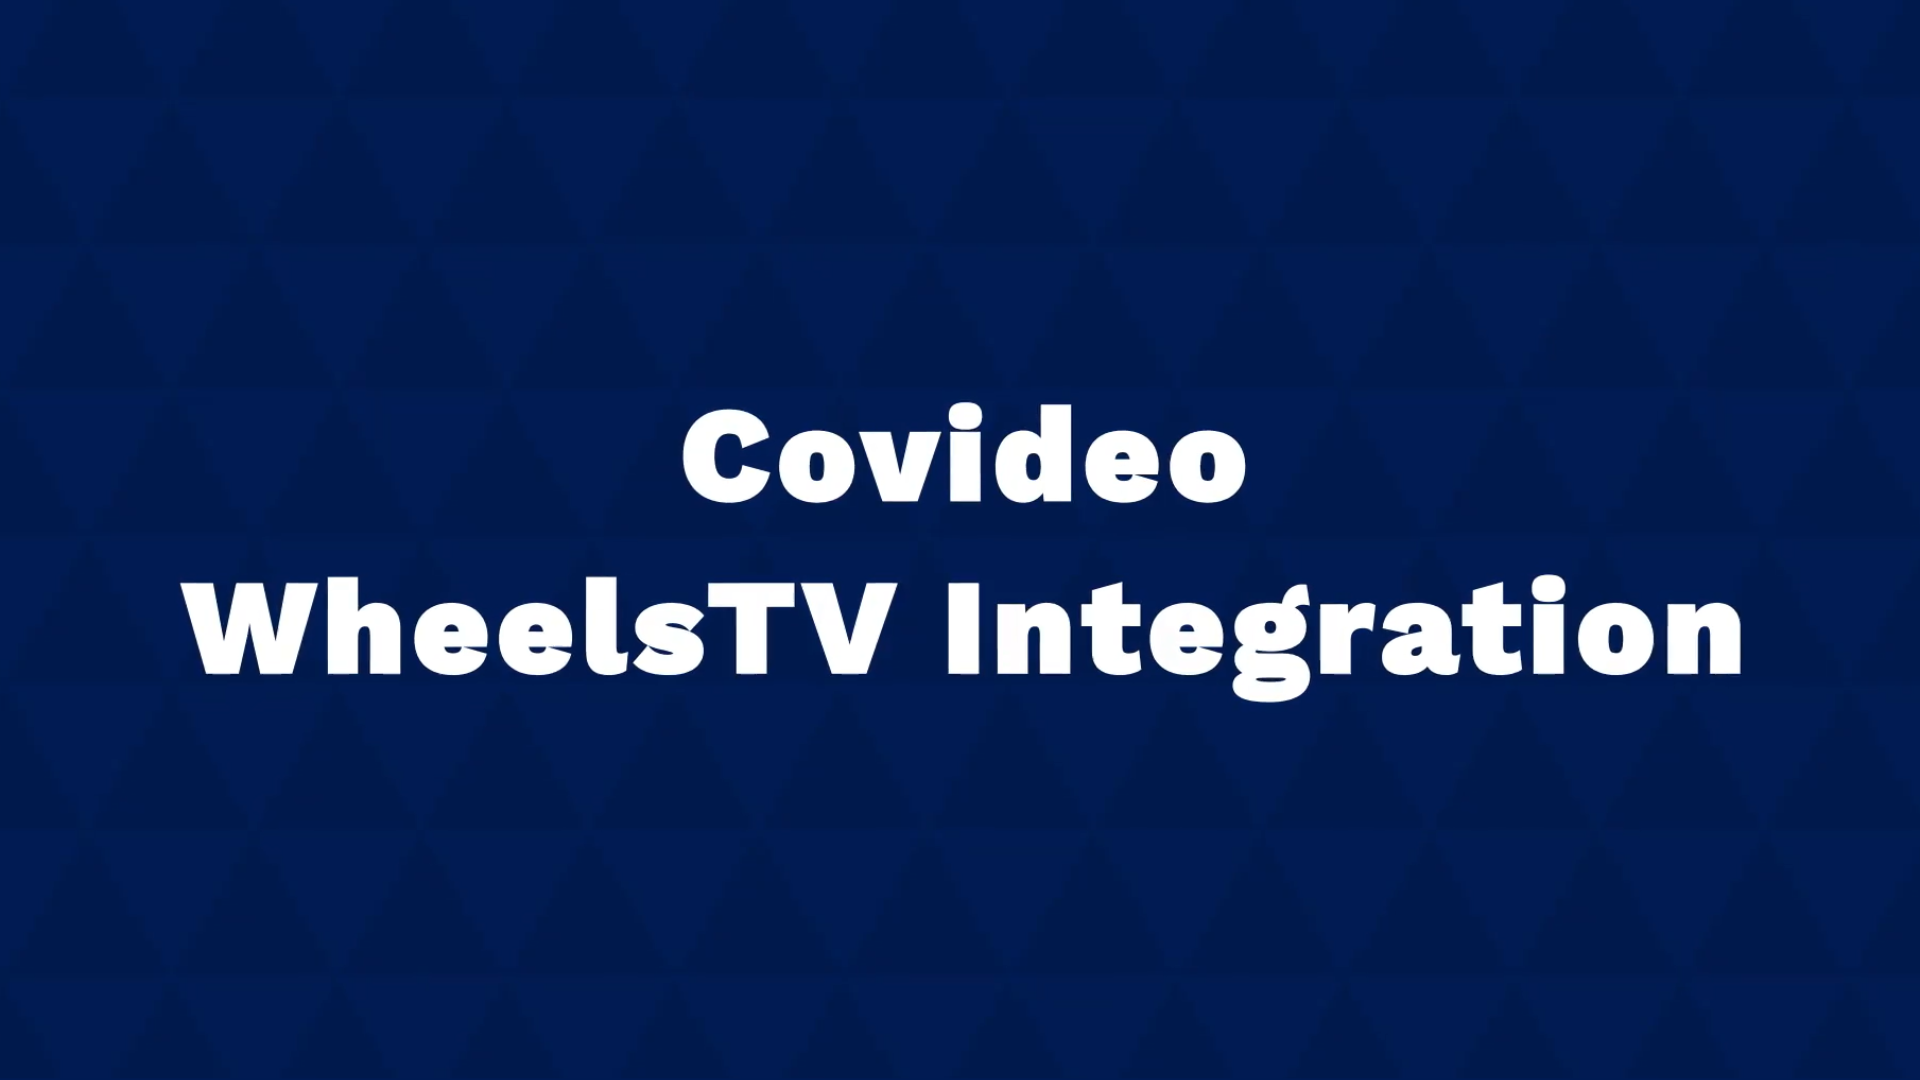 Covideo and WheelsTV Integration